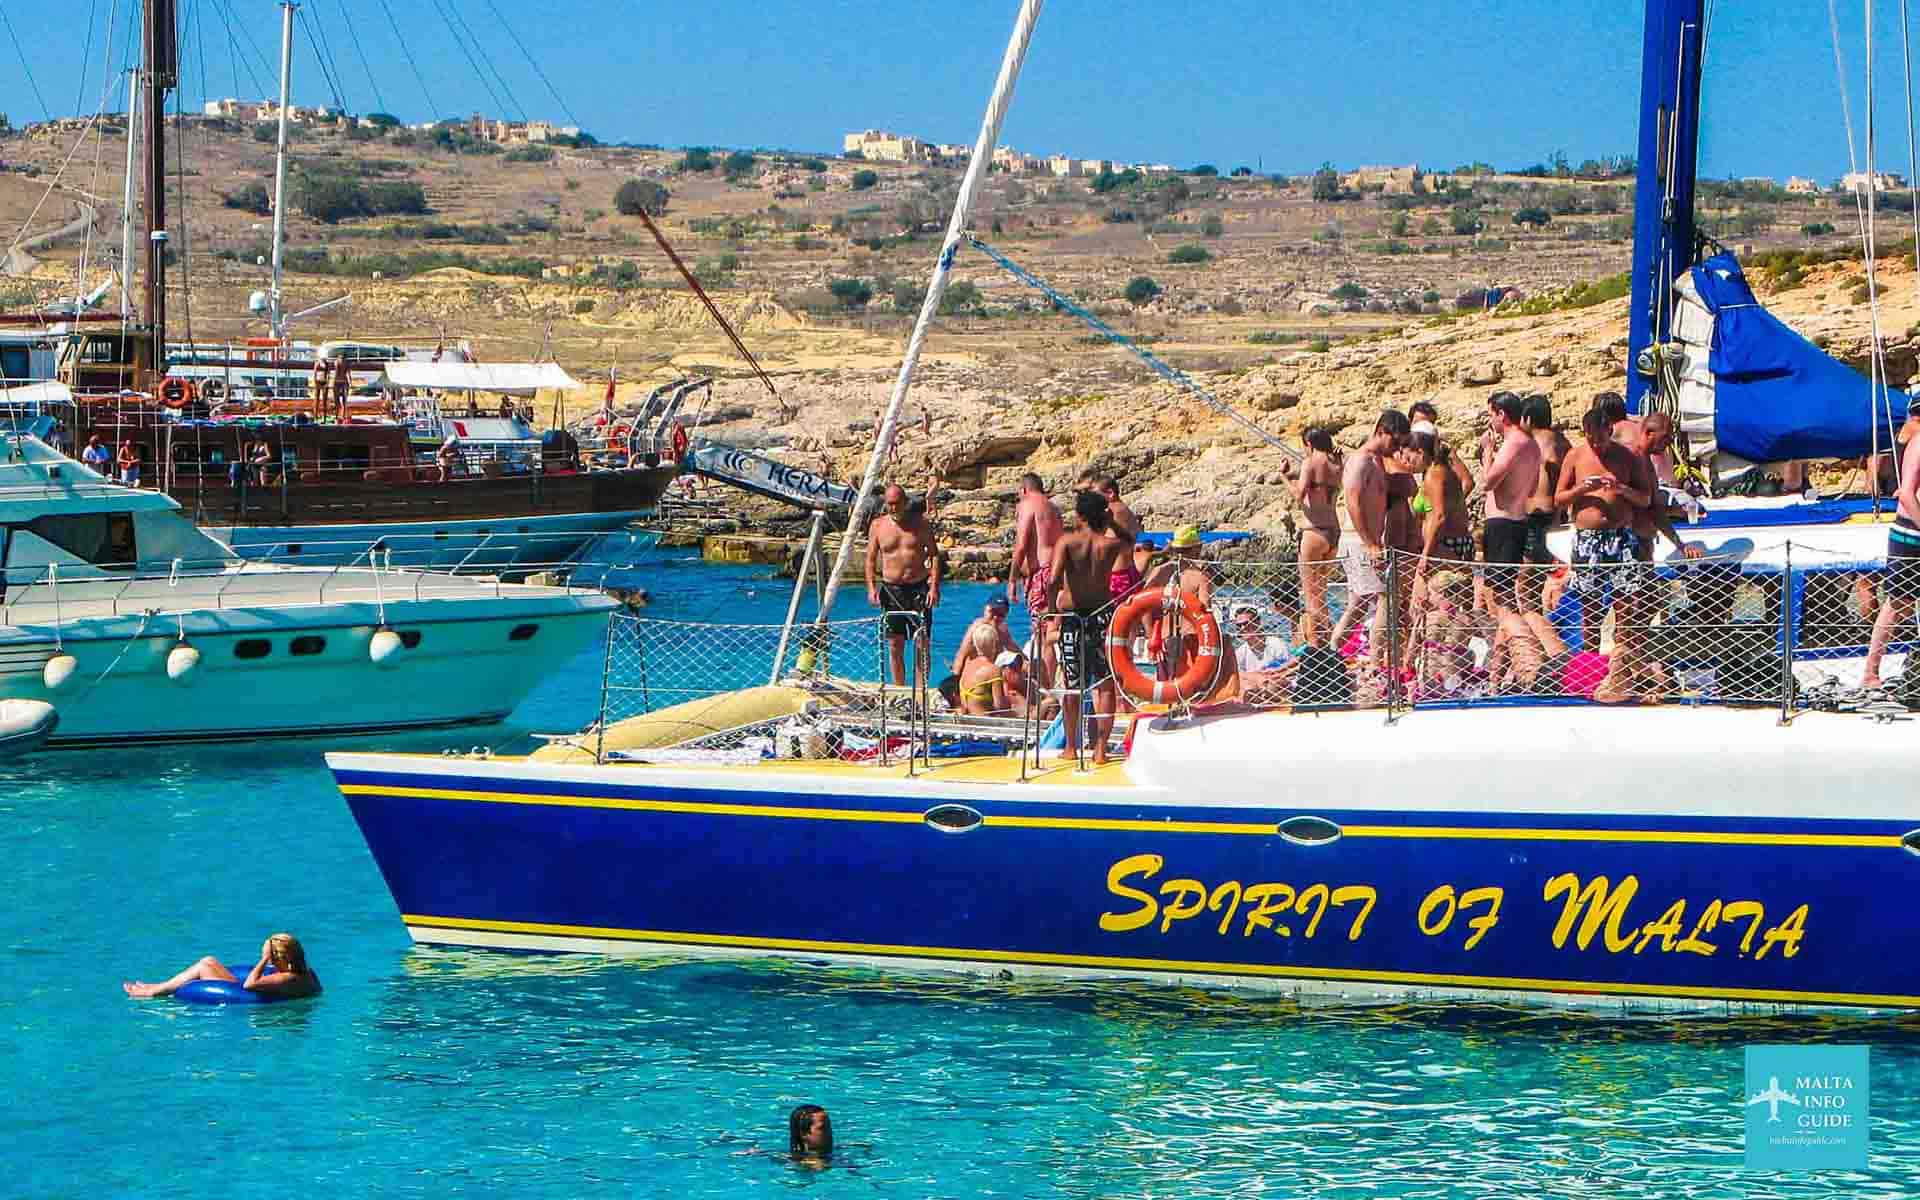 The Spirit of Malta boat docked at Comino island.